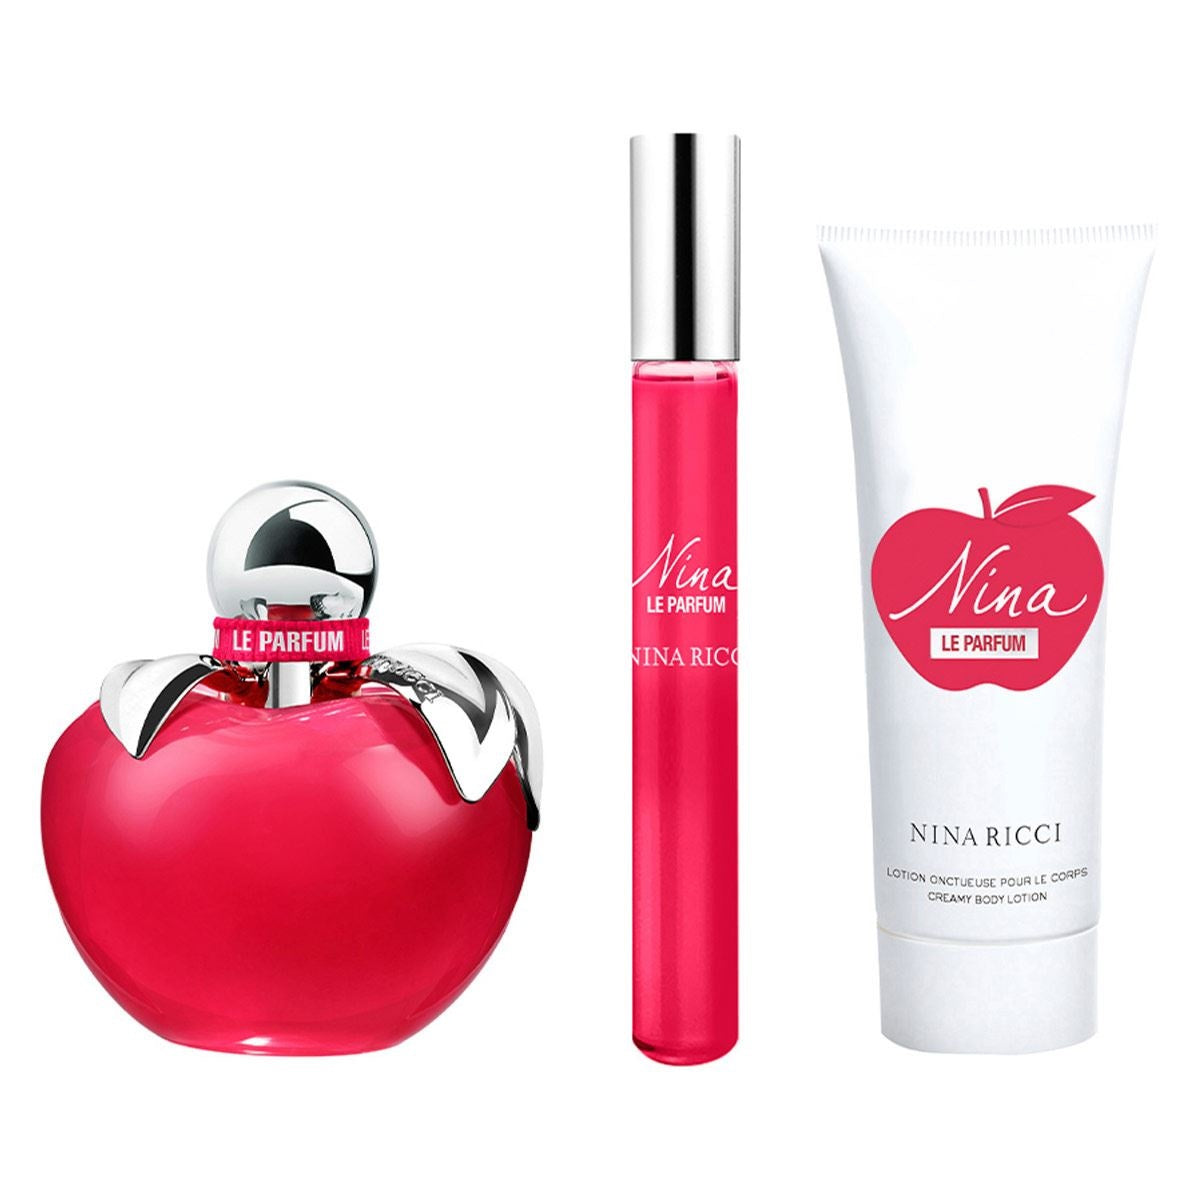 Nina Le Parfum para mujer / SET - 80 ml Eau De Parfum Spray